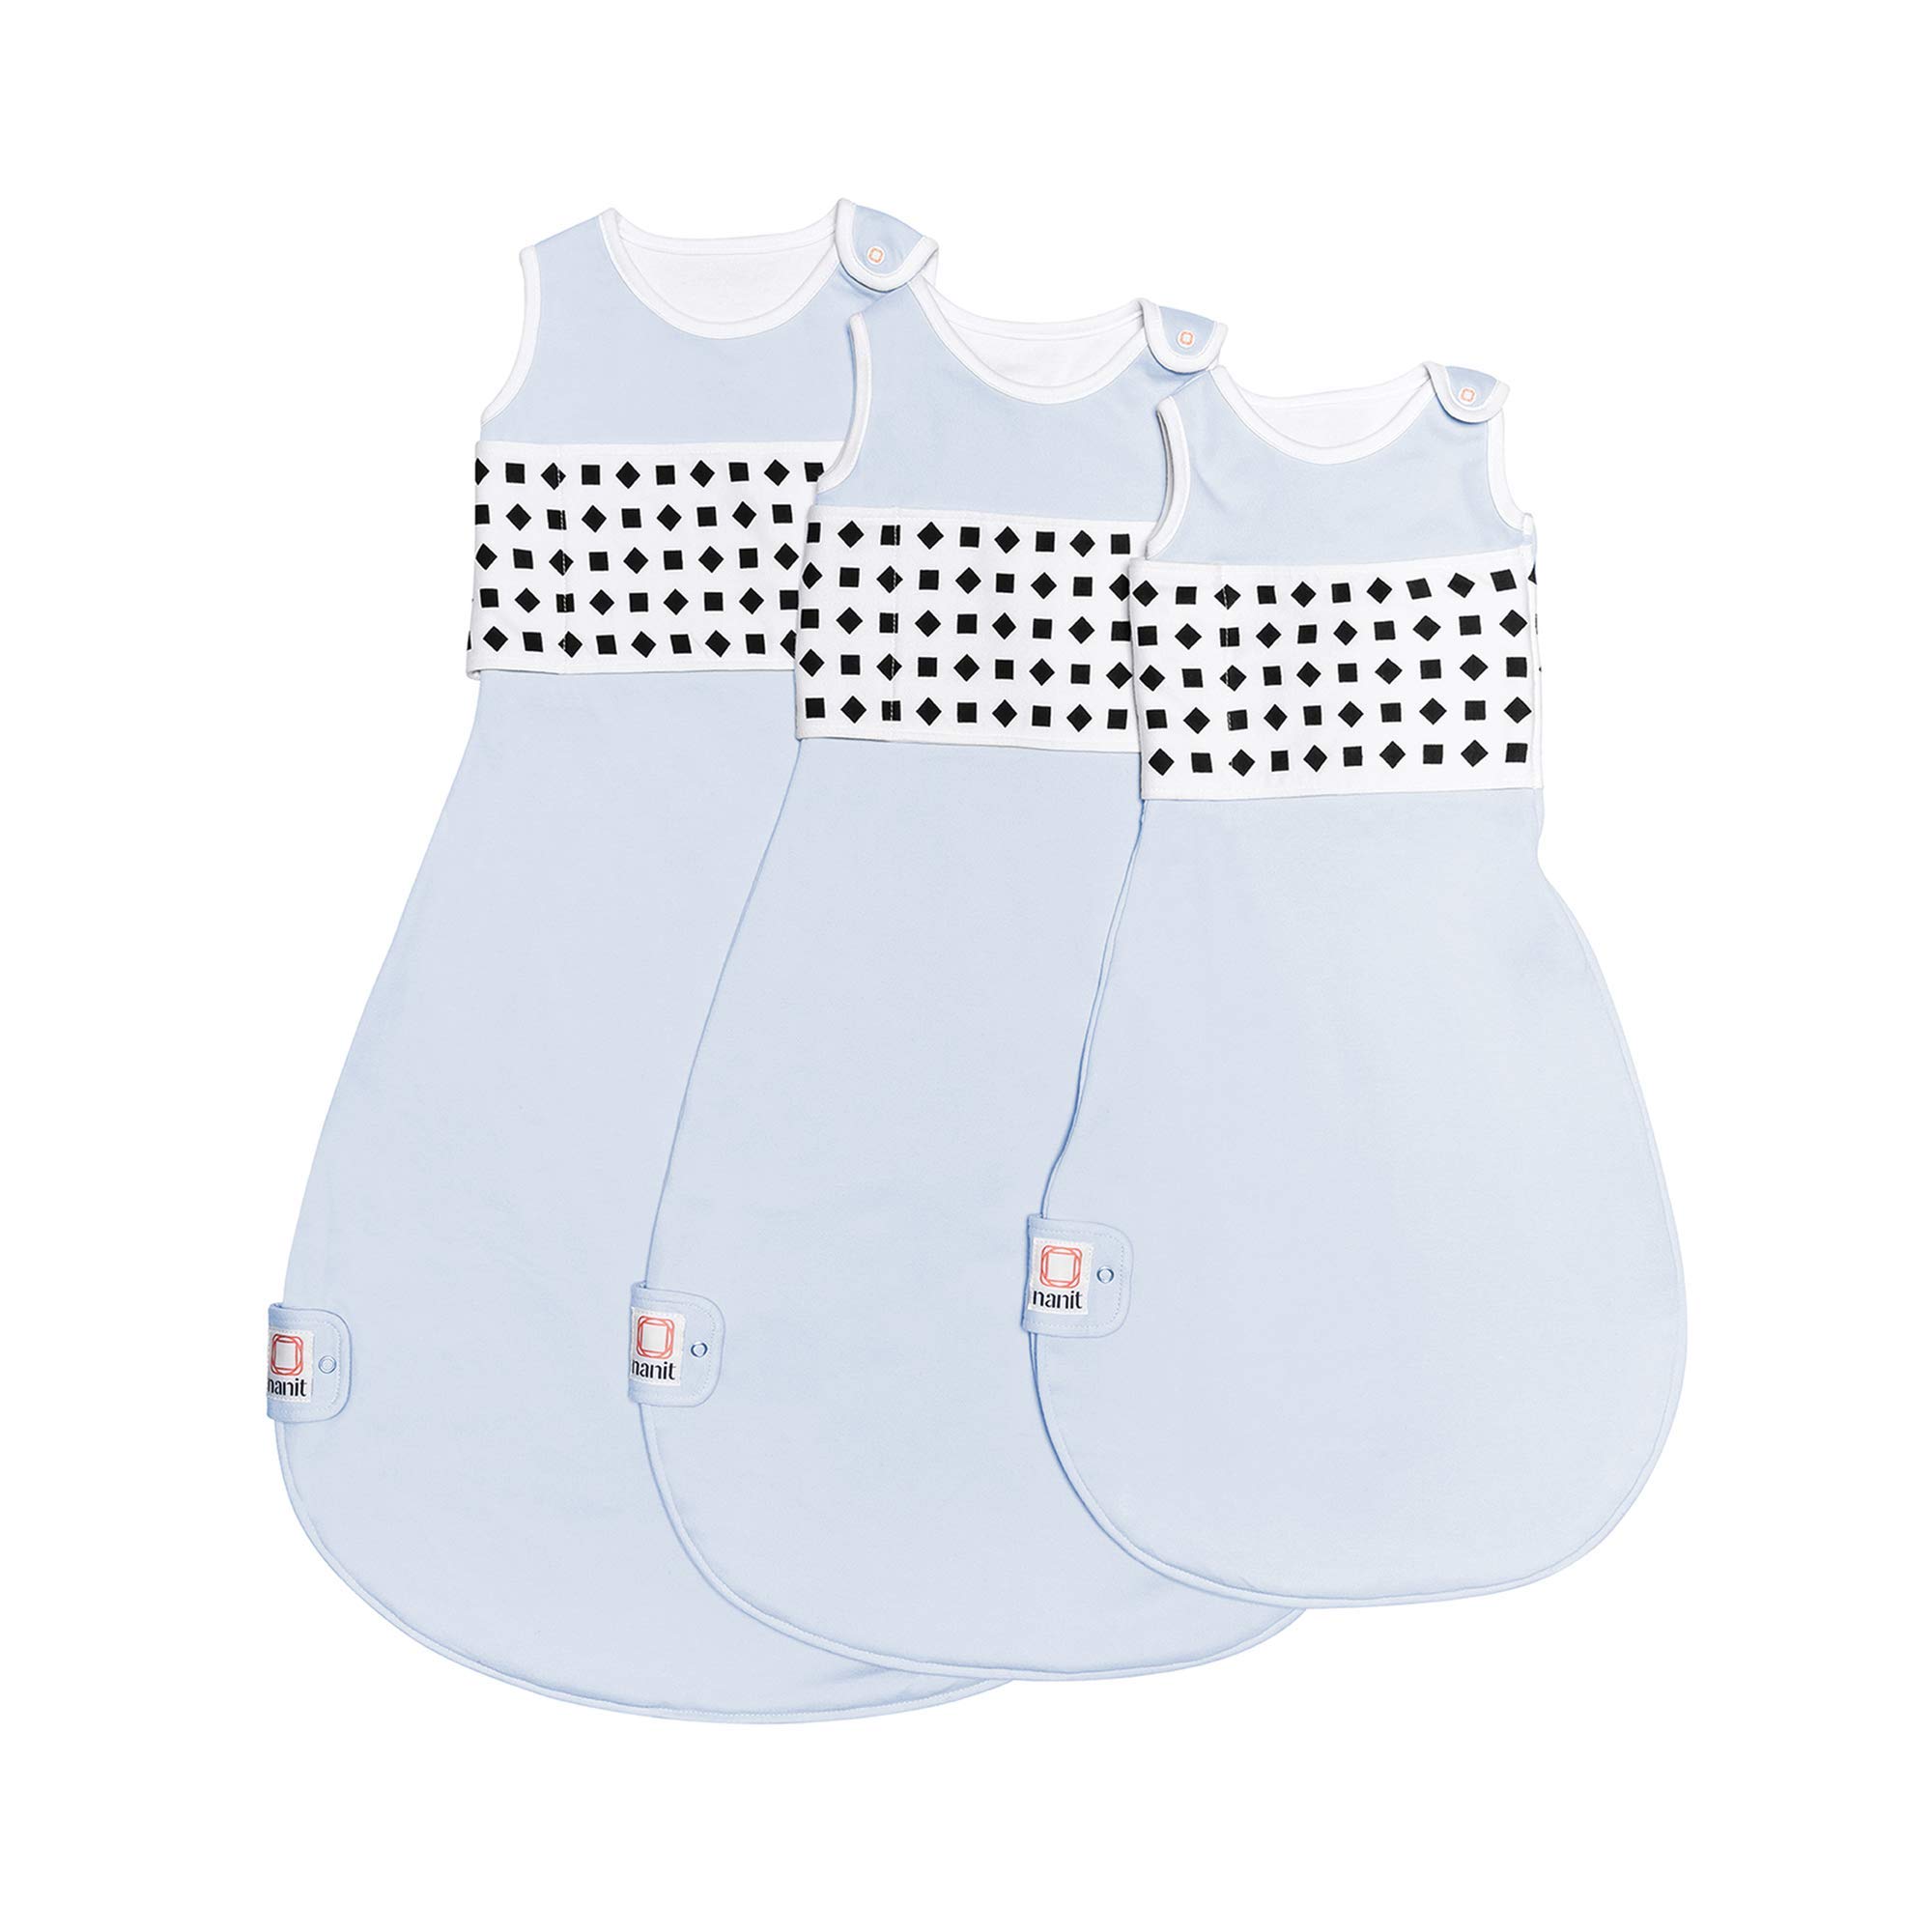 Nanit Breathing Wear Sleeping Bag – 100% Cotton Baby Sleep Sack - Works Pro Baby Monitor to Track Breathing Motion Sensor-Free, Real-Time Alerts, Size Large, 12-24 Months, Powder Blue